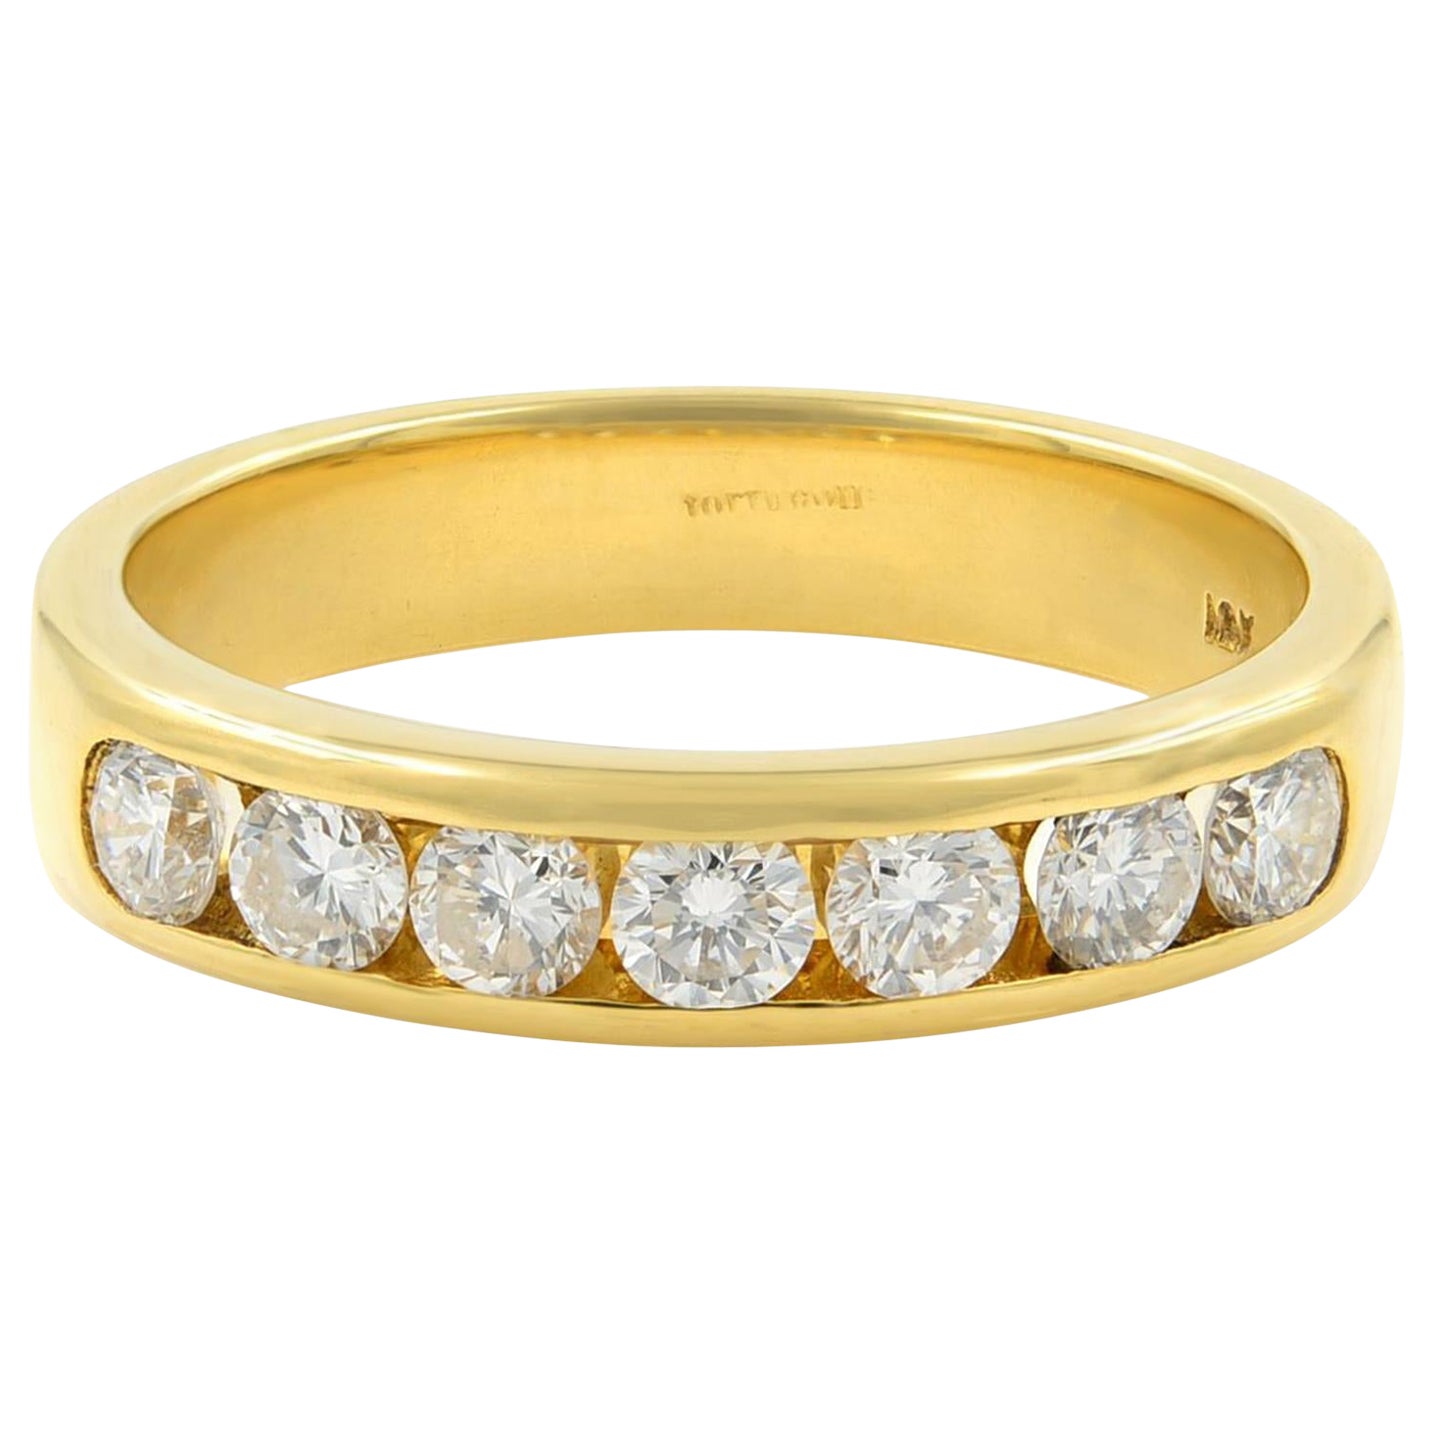 Channel Set Round Diamond Wedding Ring Band 18K Yellow Gold 0.50Cttw